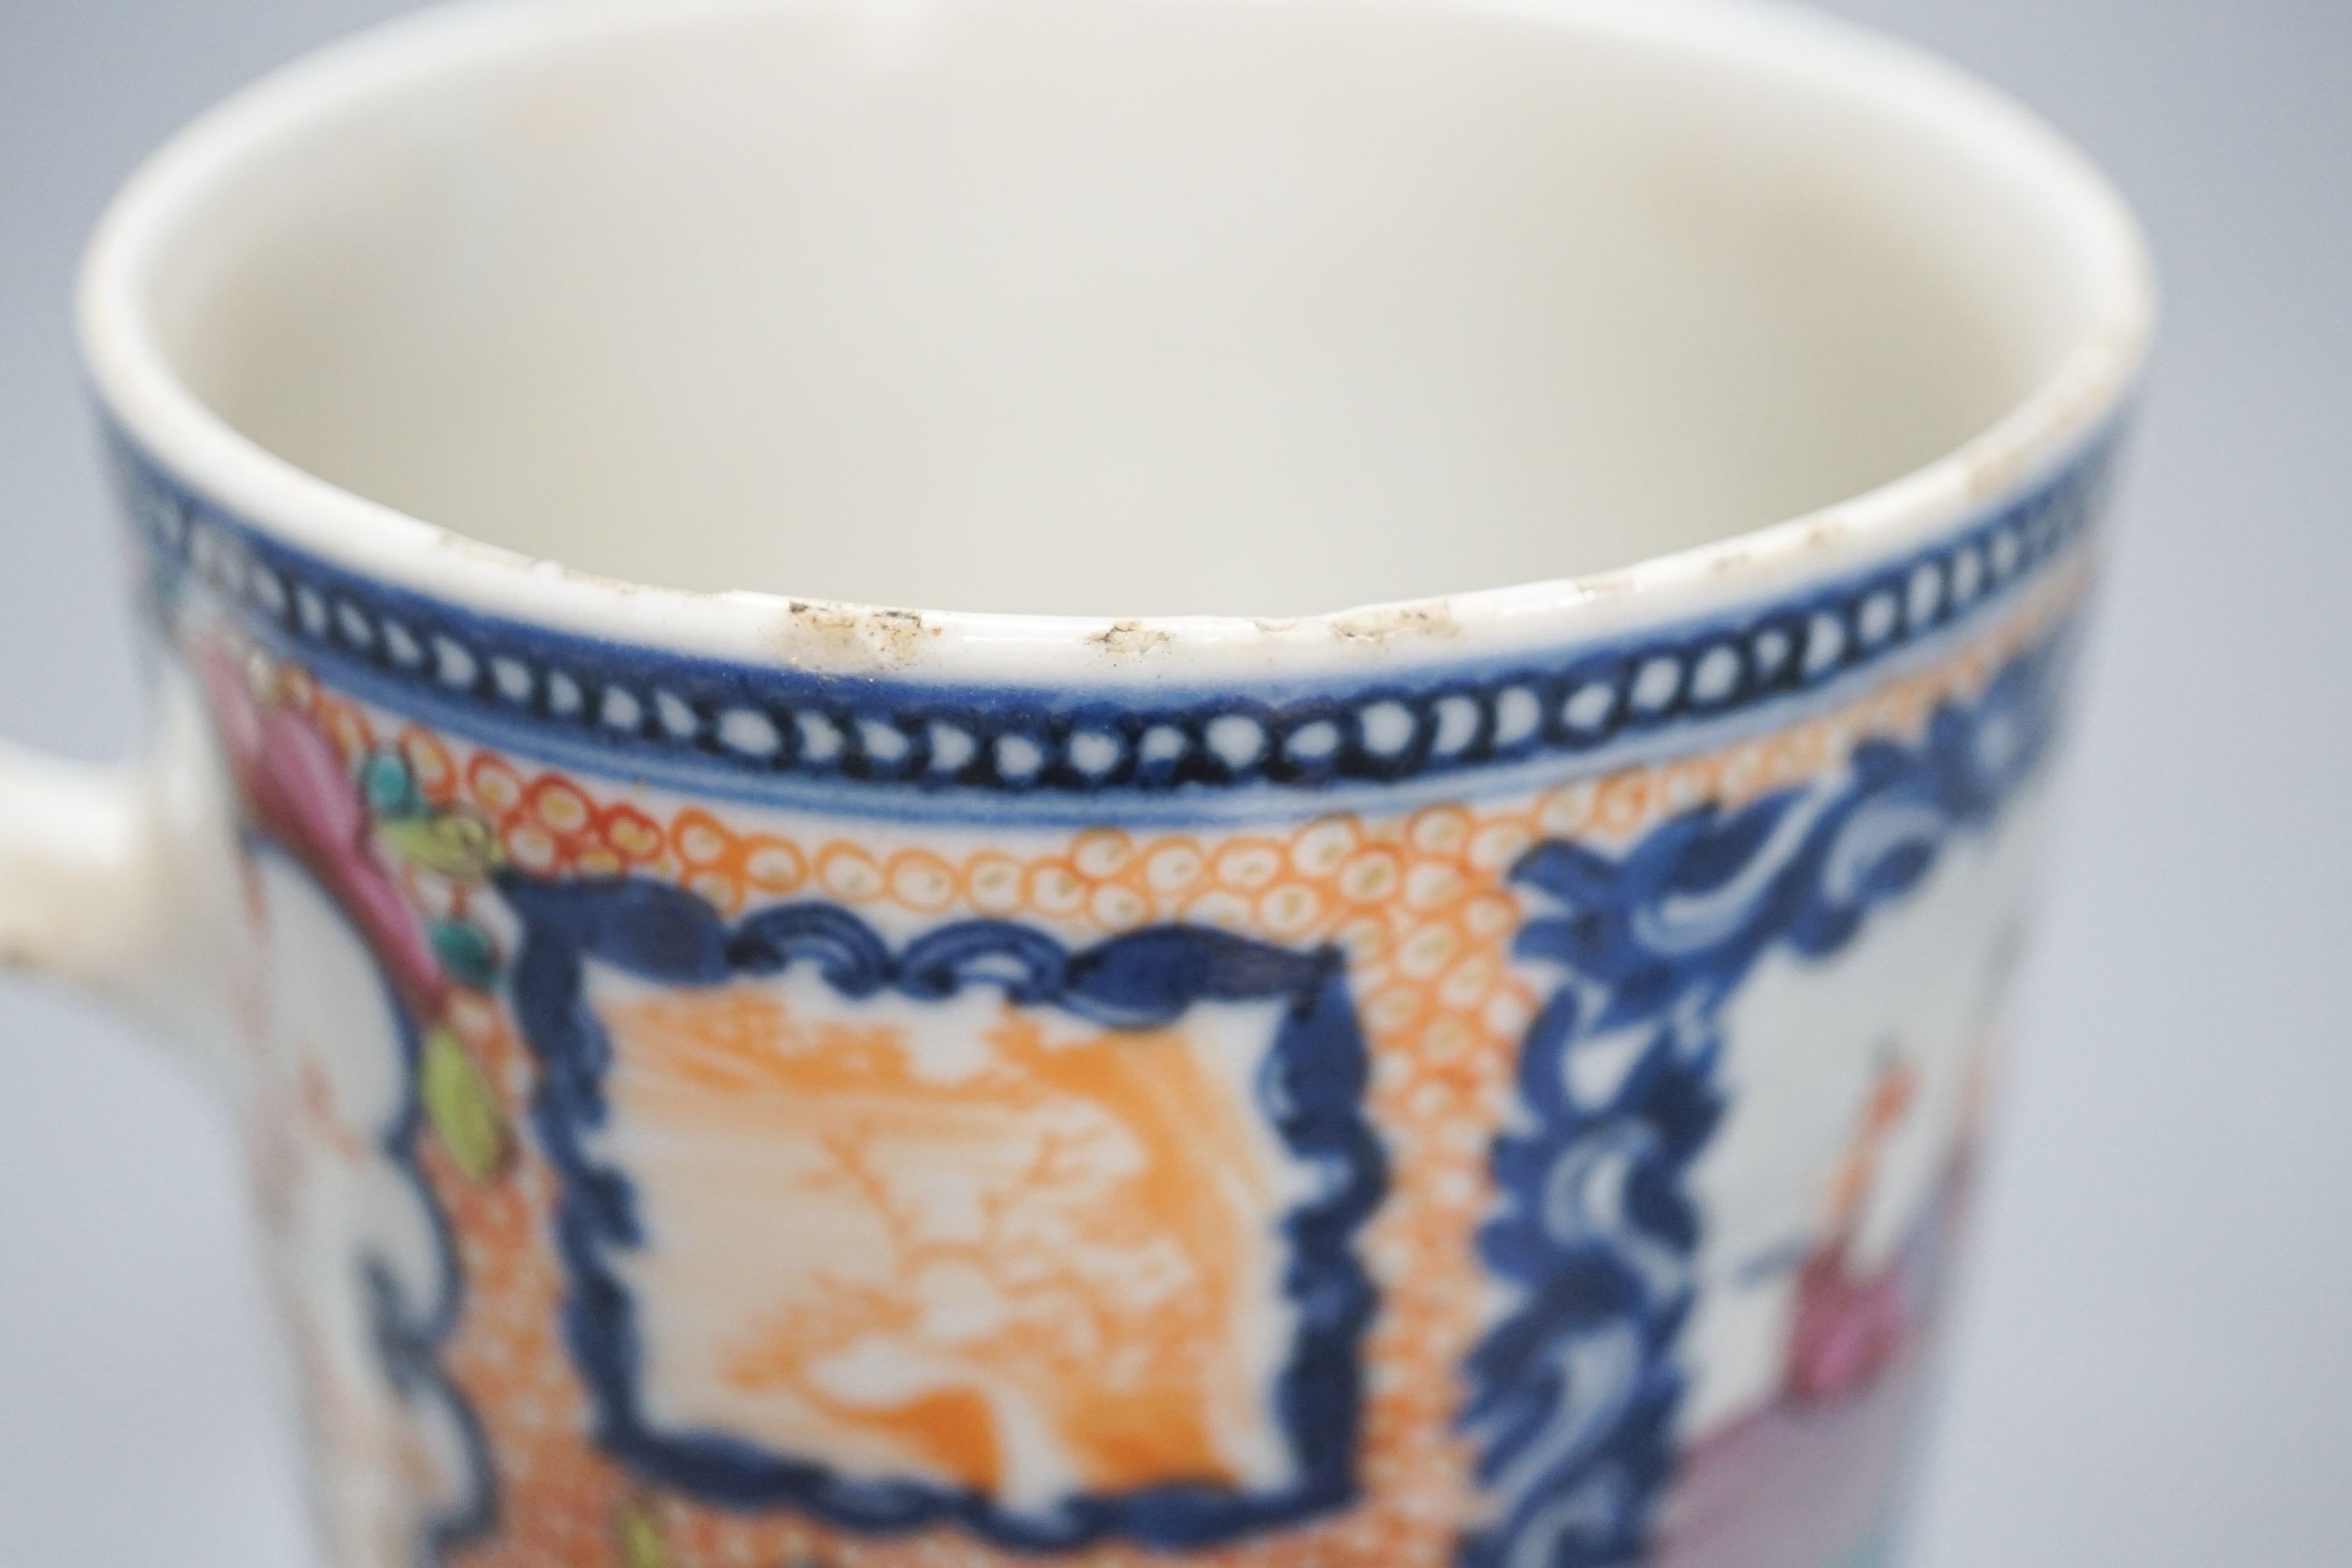 A Chinese export Mandarin pattern mug, Qianlong period, height 11cm